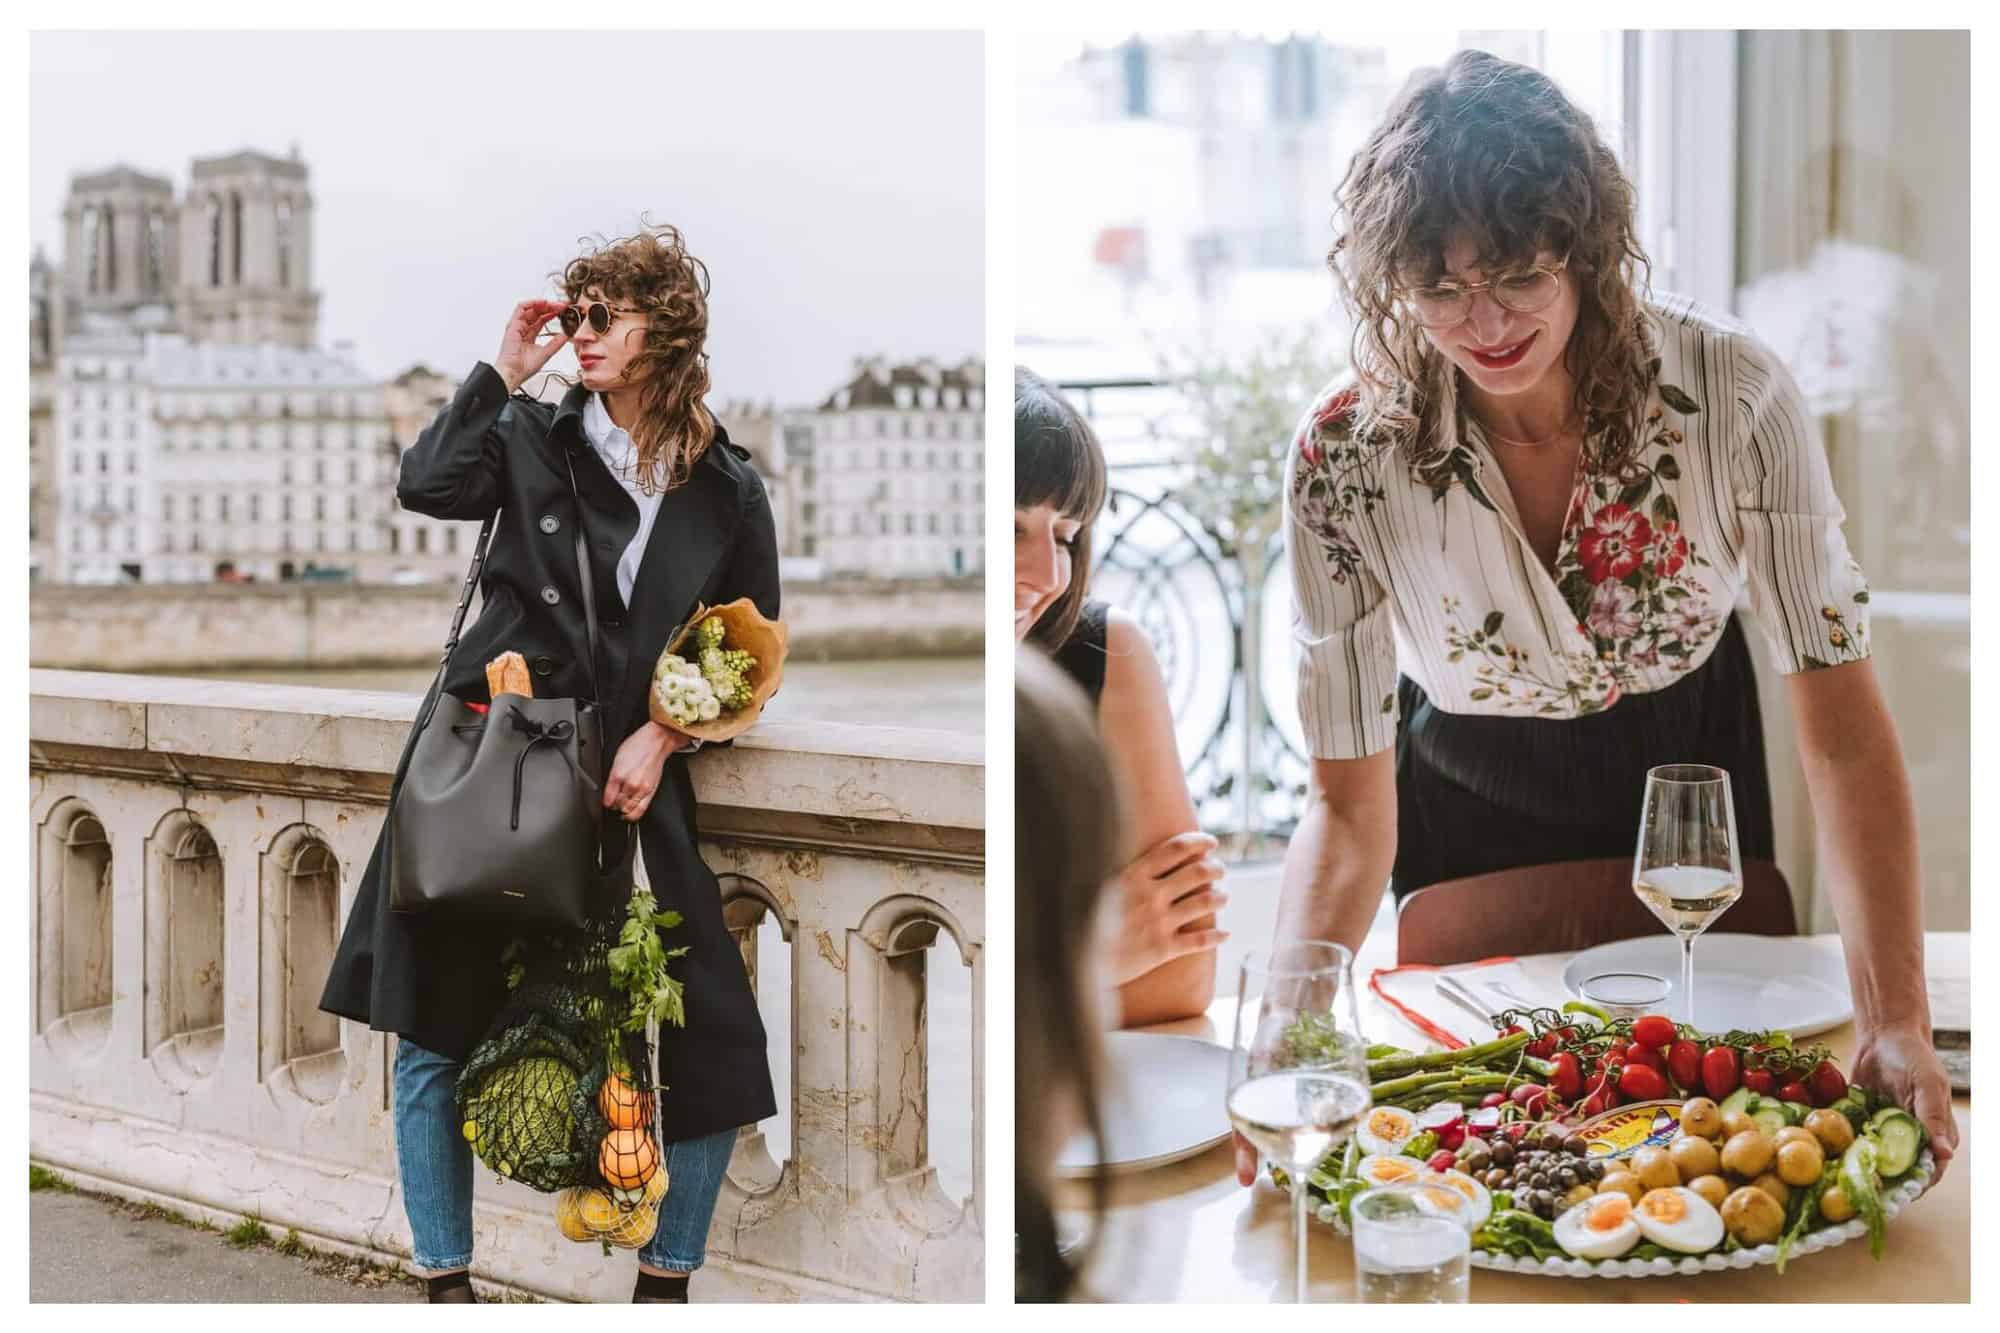 The author Rebekah Peppler standing on a bridge in Paris carrying fruit, vegetables and flowers. Rebekah Peppler serving up a spead of fresh vegetables to friends.